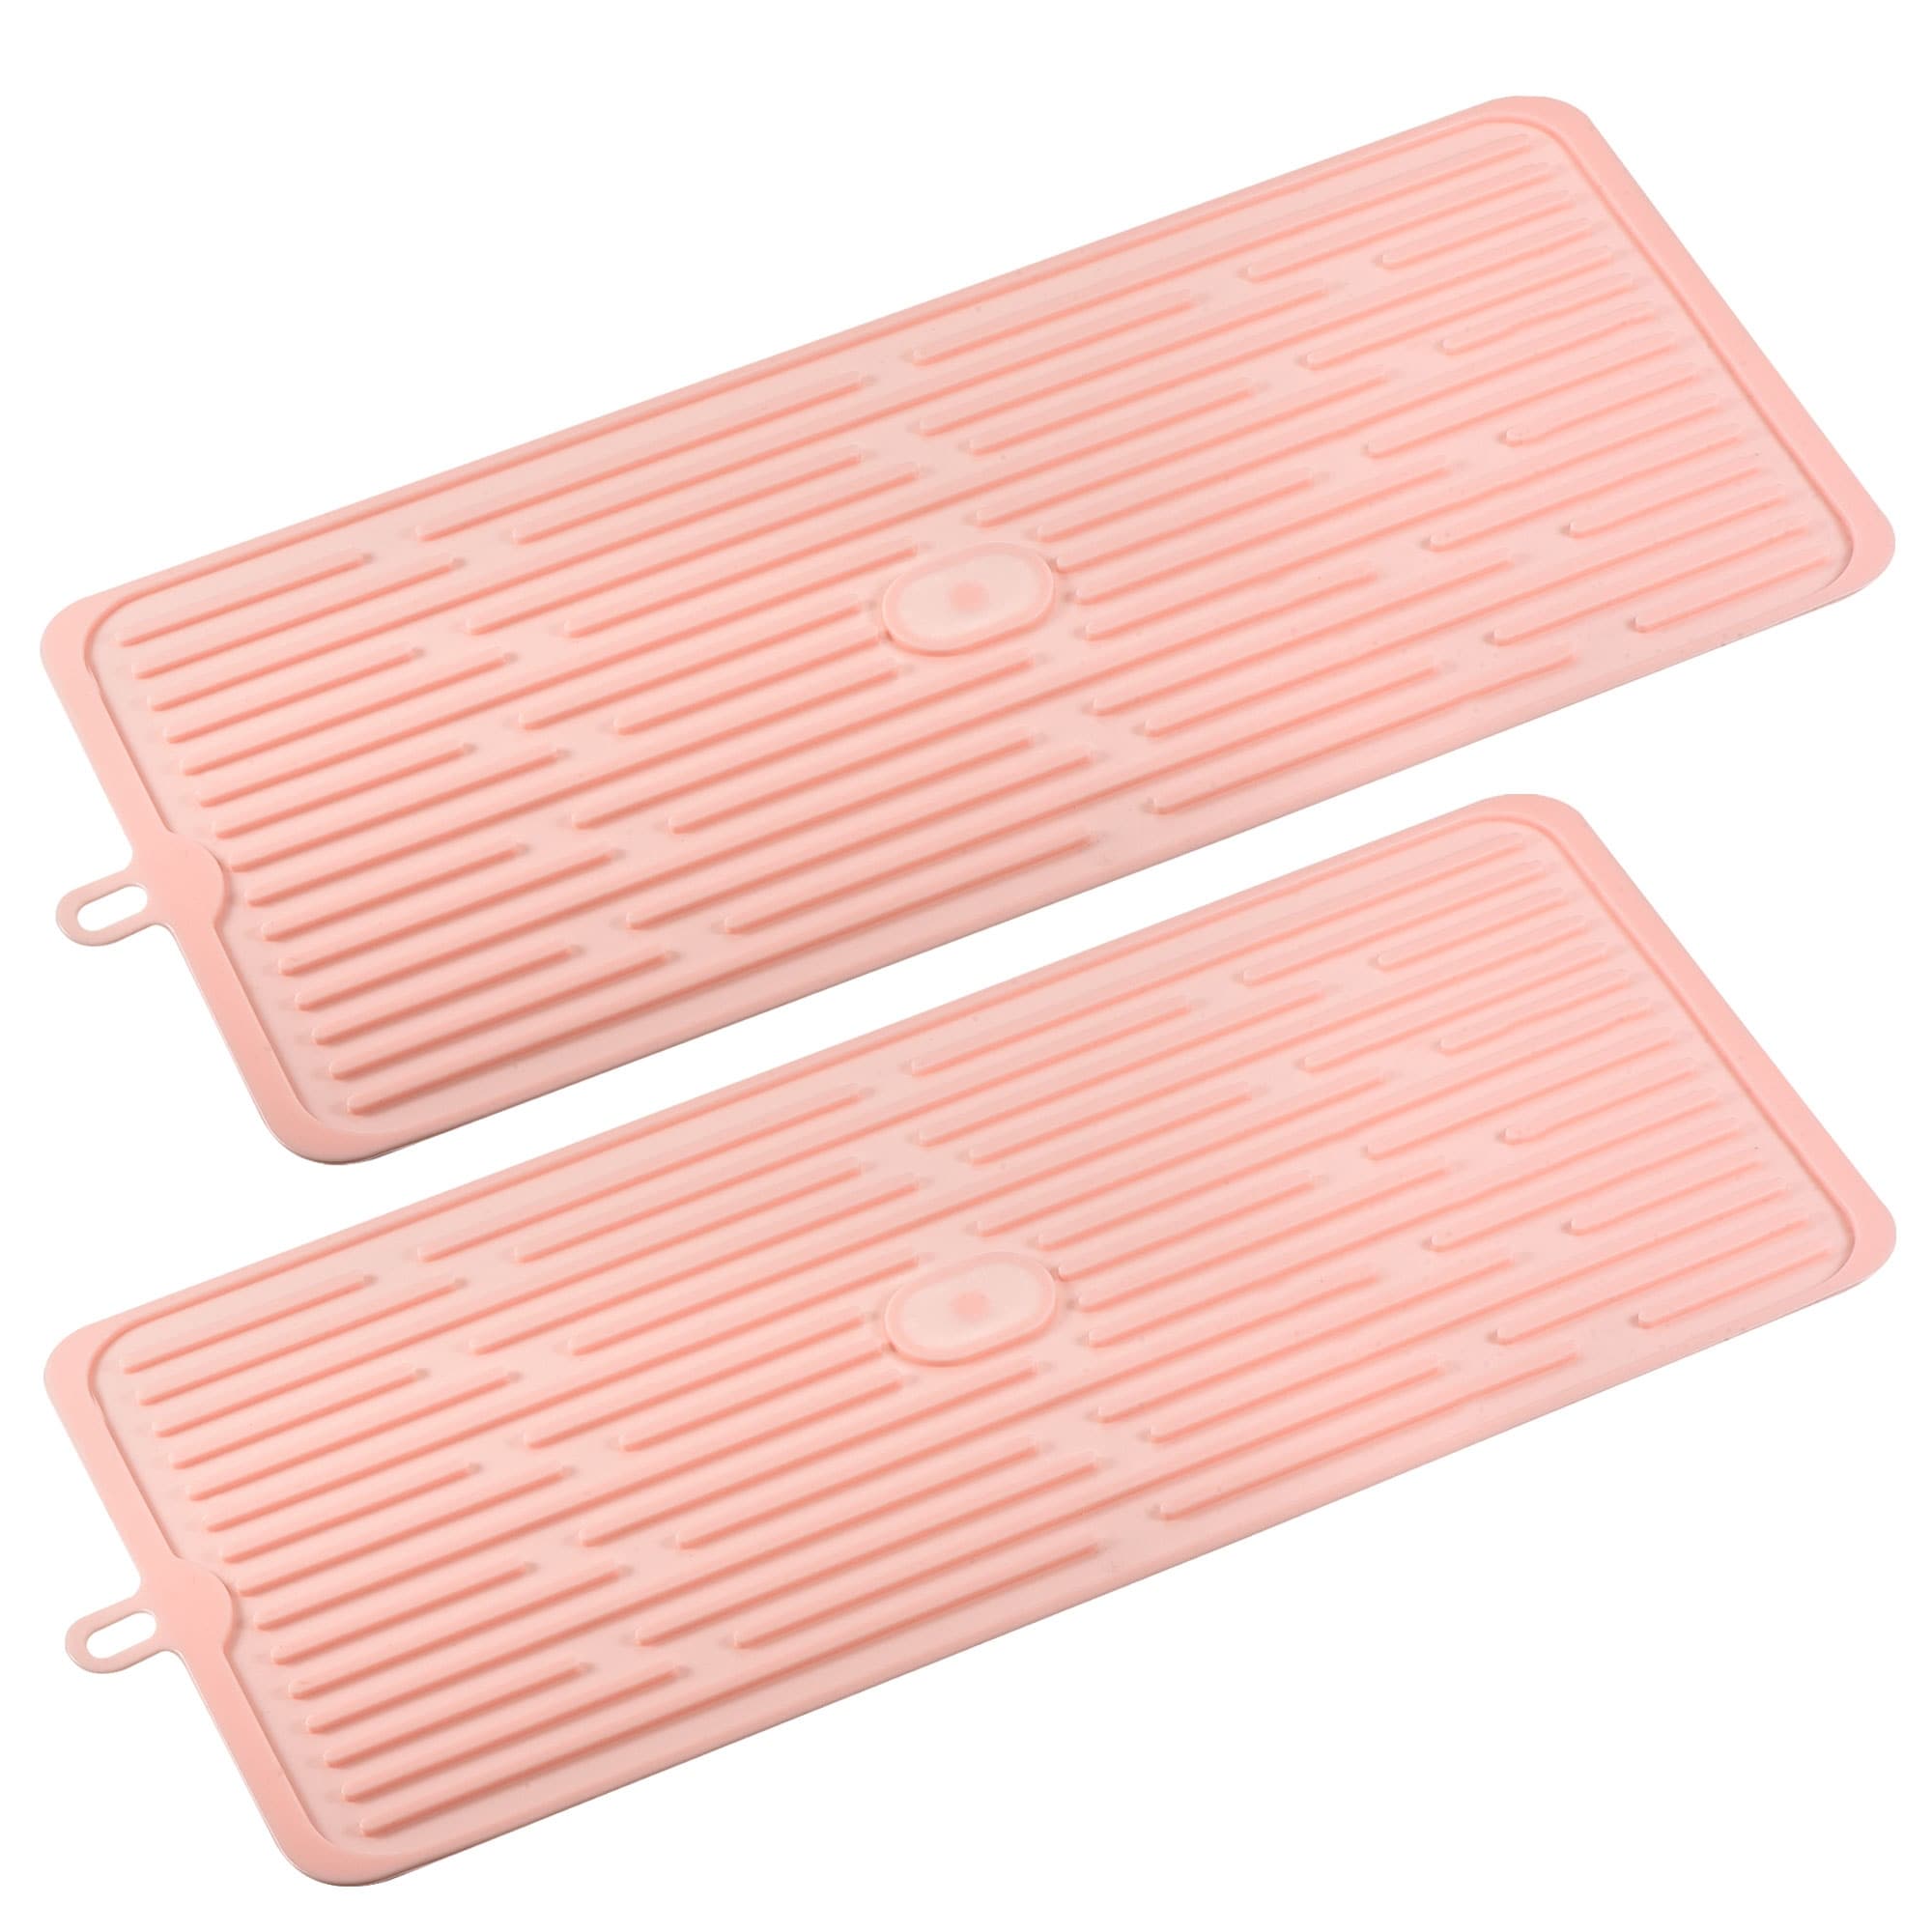 Norpro 16 x 18 Washable Microfiber Dish Drainer Glass Drying Mat